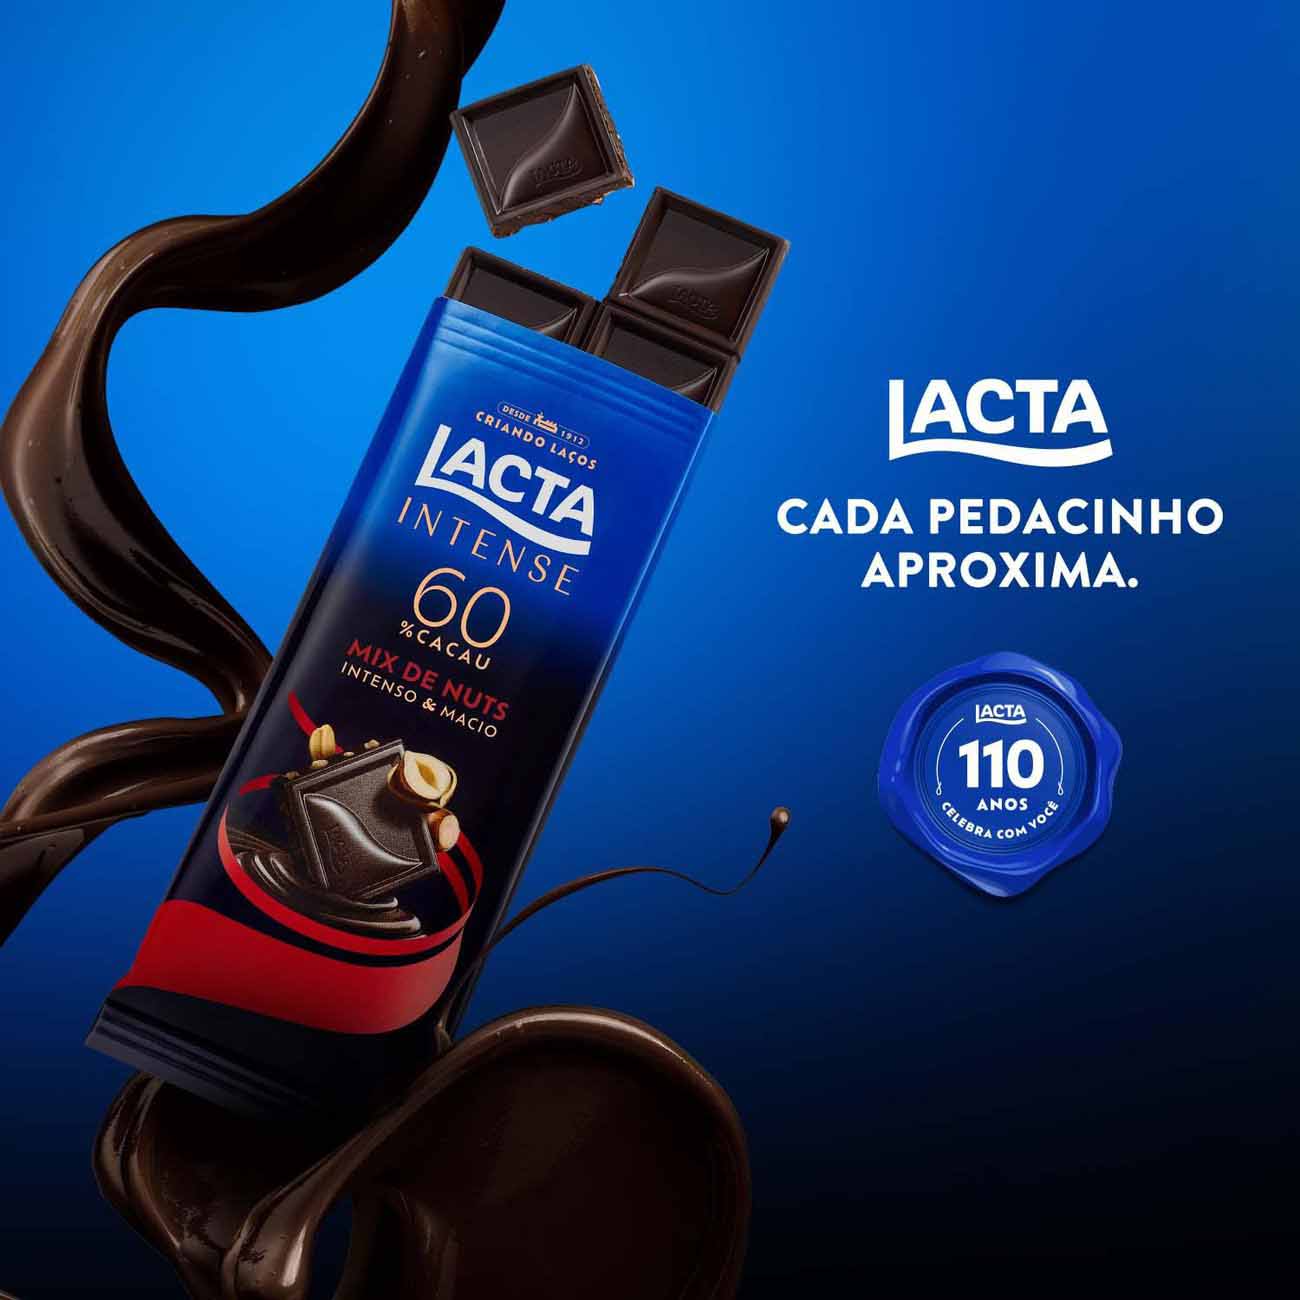 Chocolate Lacta Intense Amargo 60% Cacau Mix de Nuts 85g